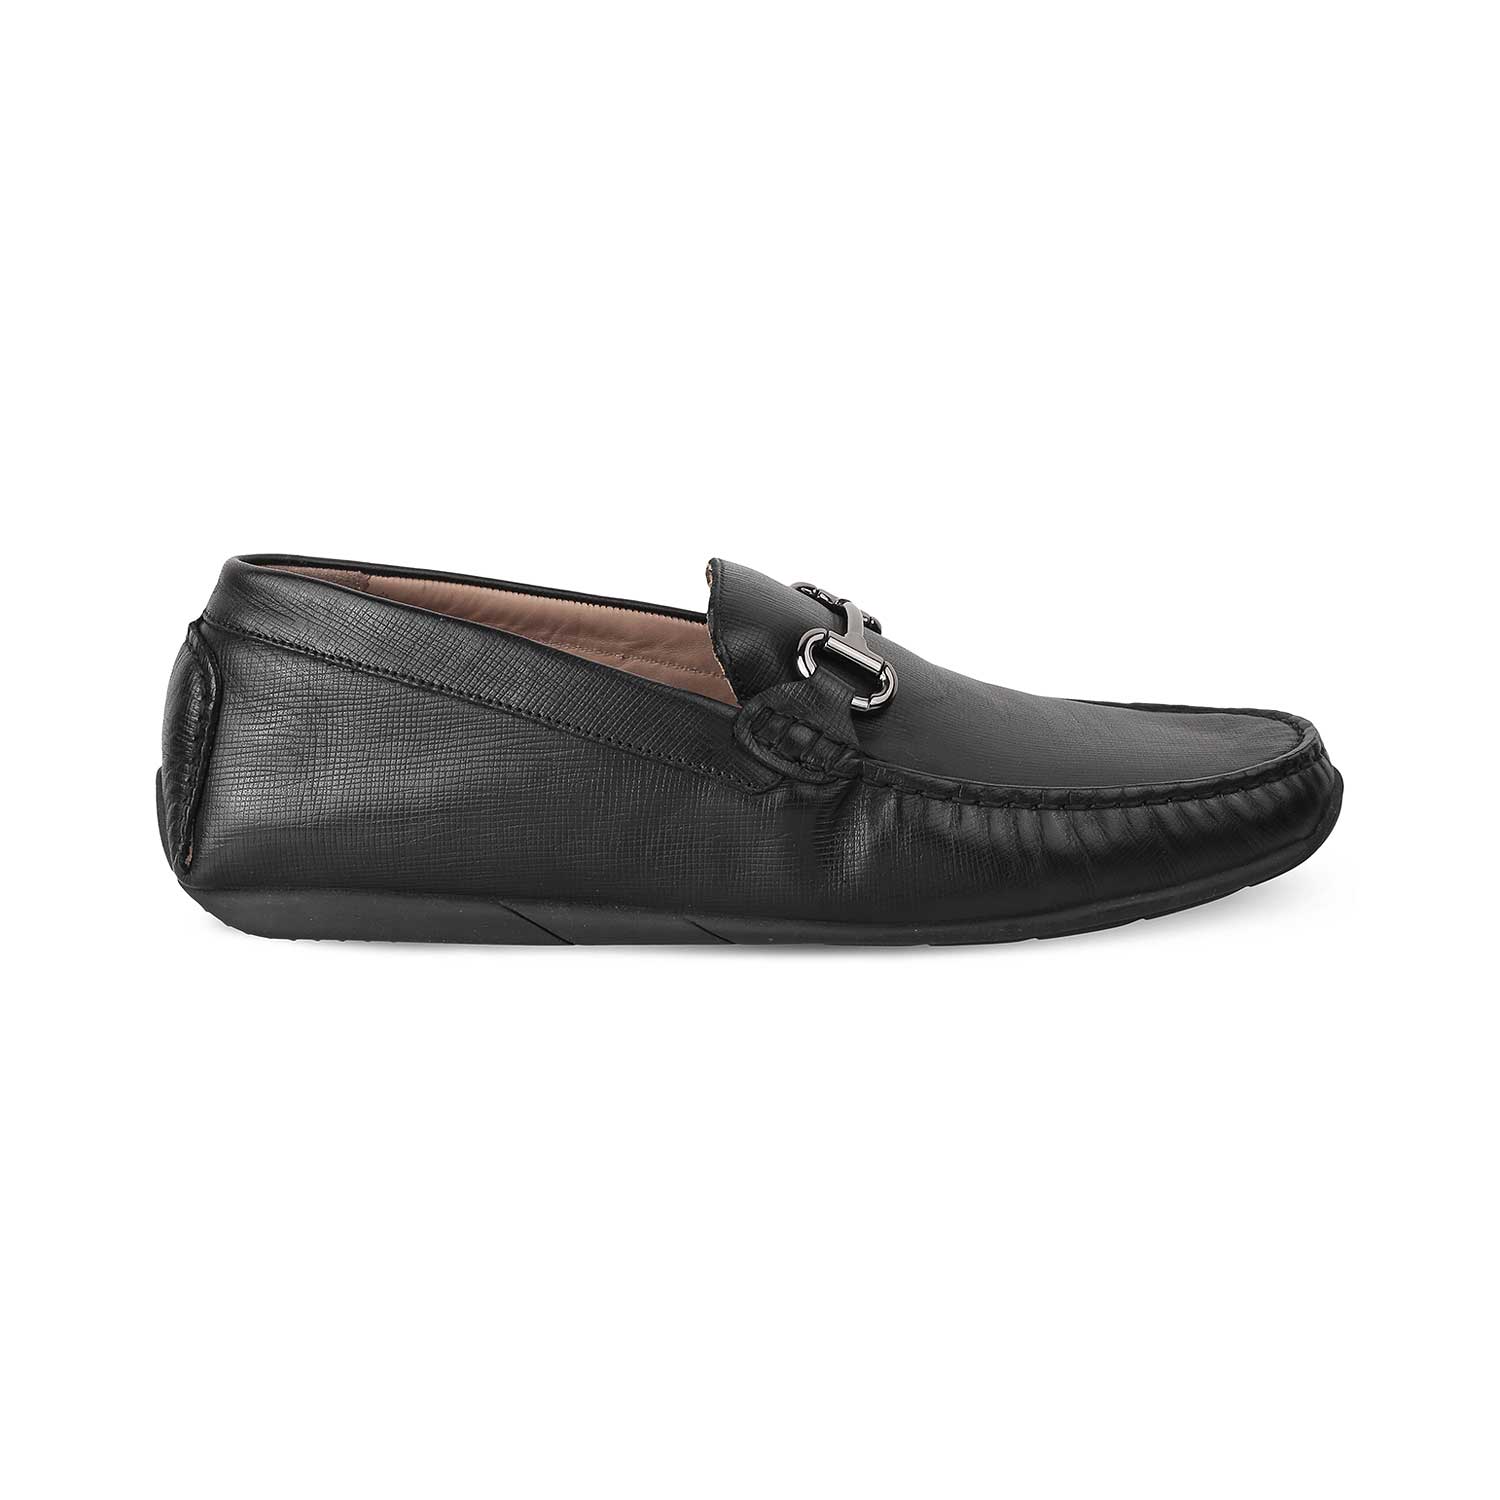 Namshi Black Leather Driving Loafers for Men Online at Tresmode